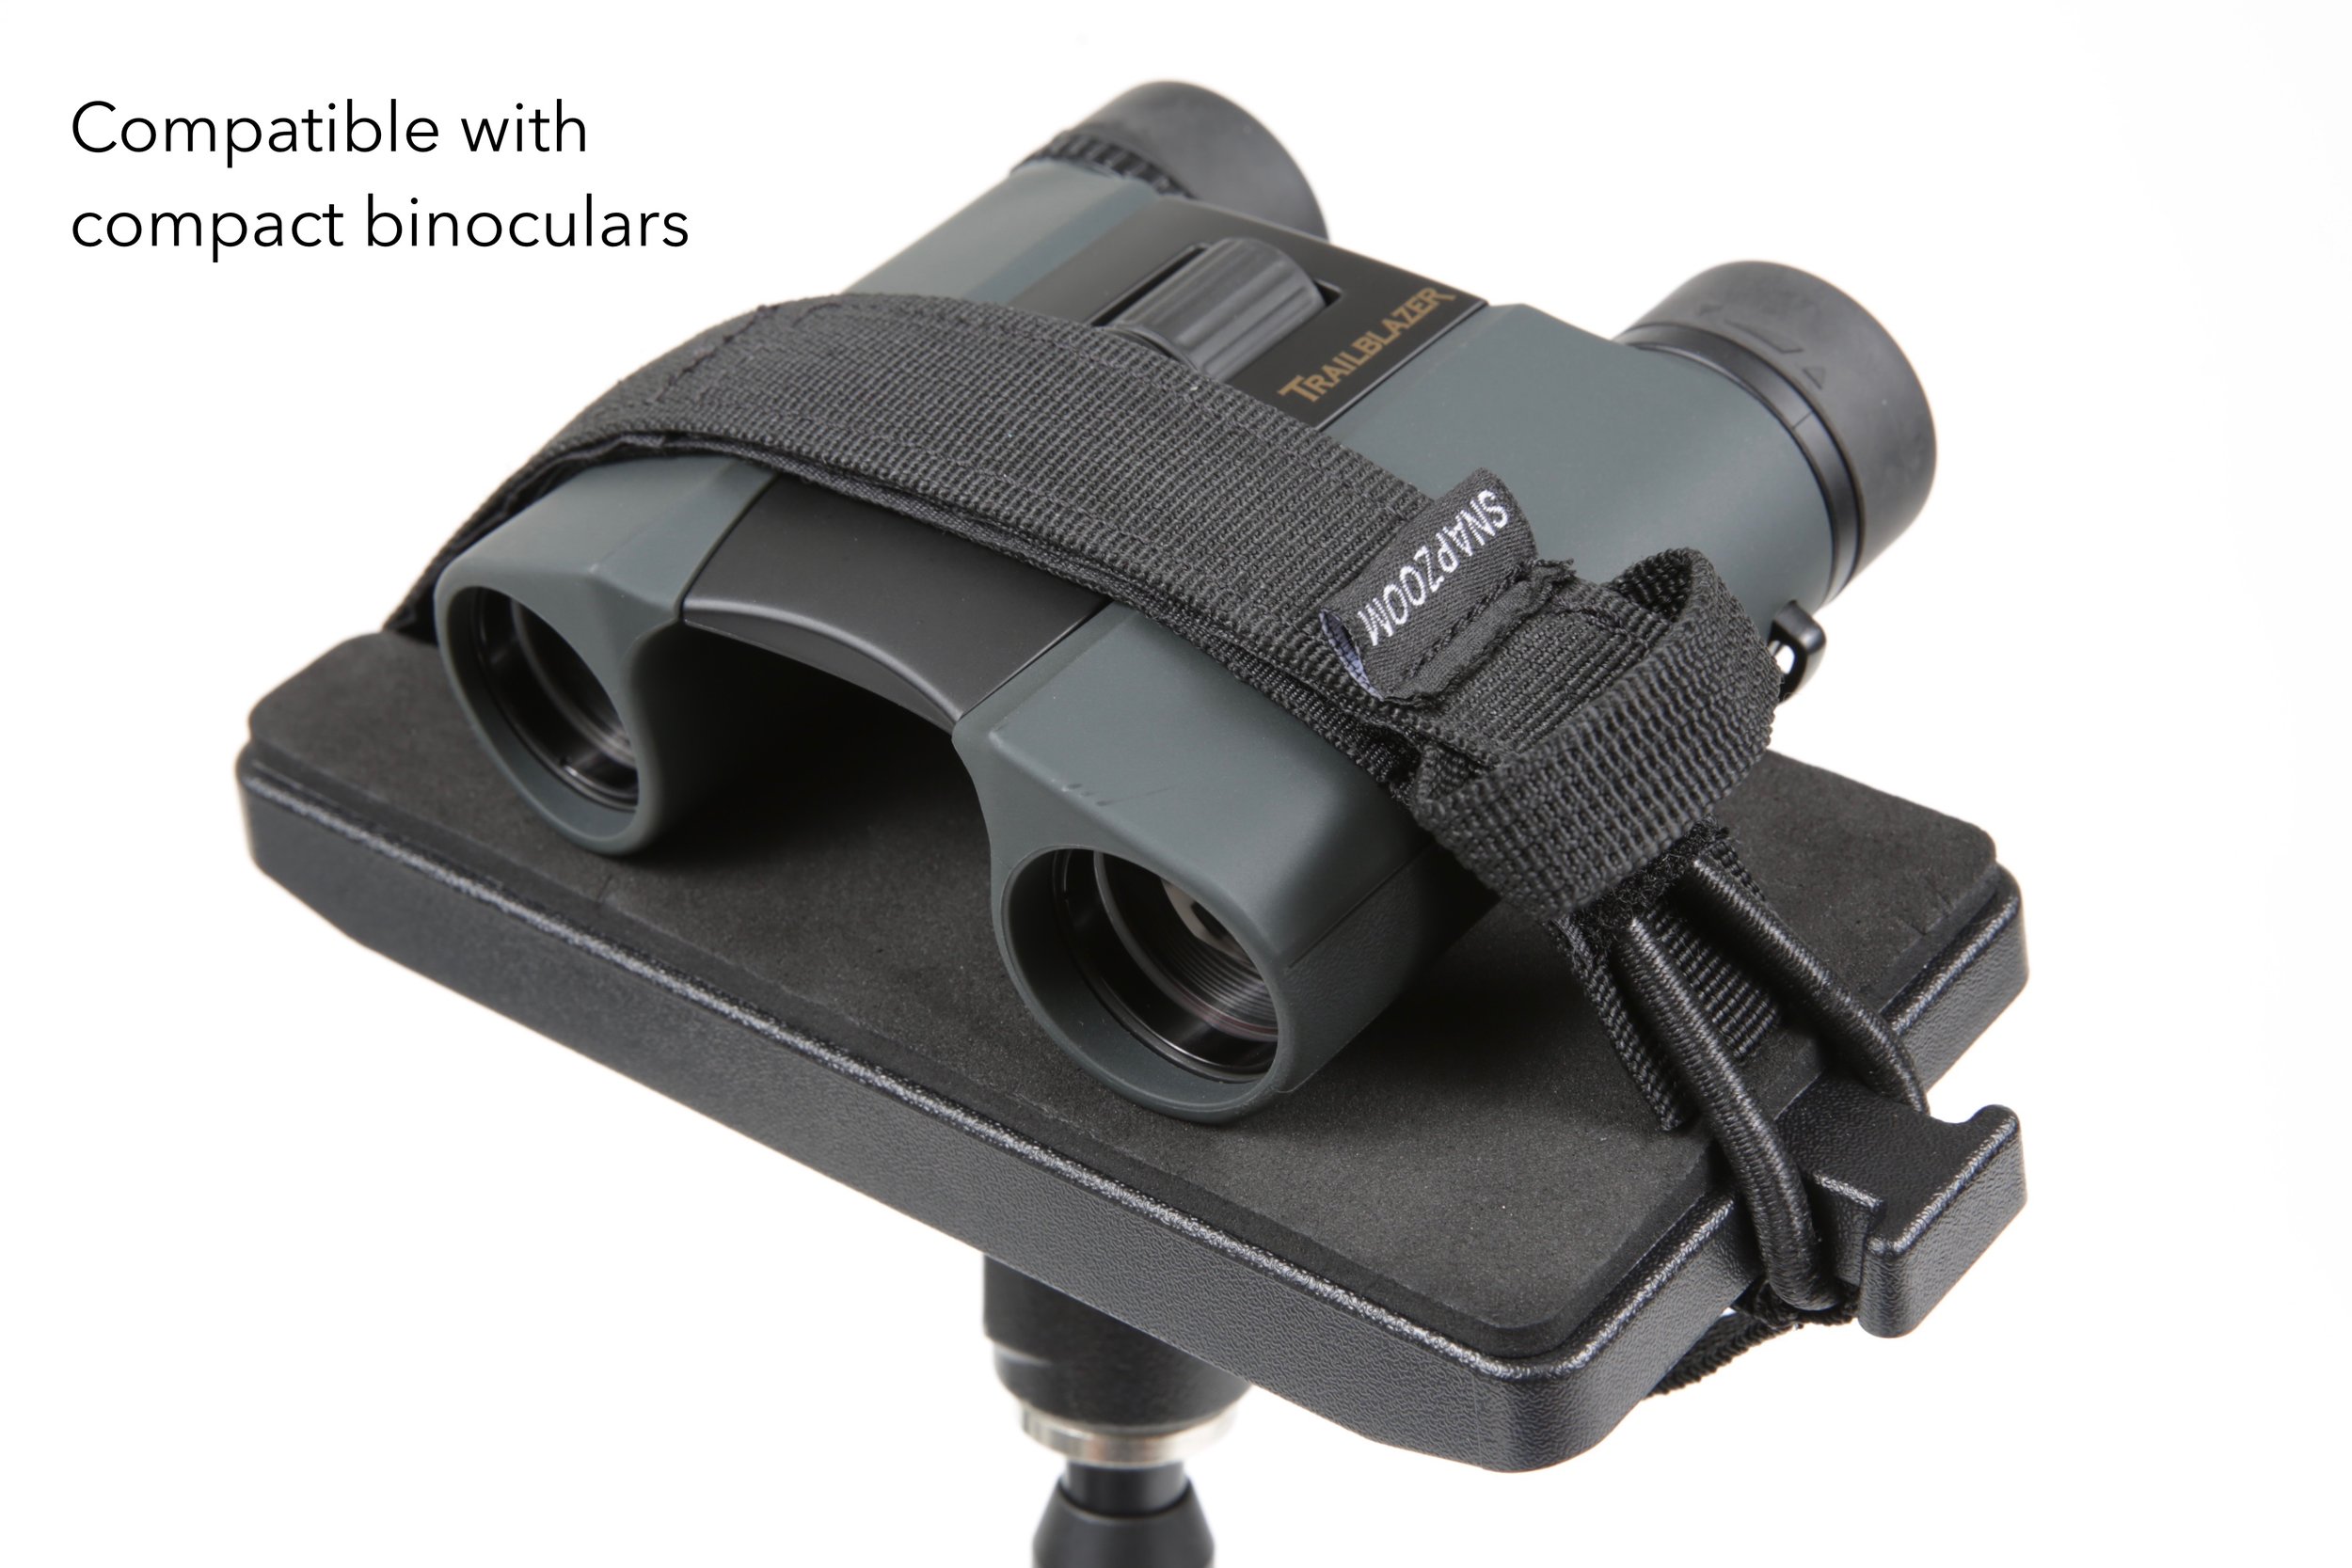 snapzoom universal binocular tripod mount